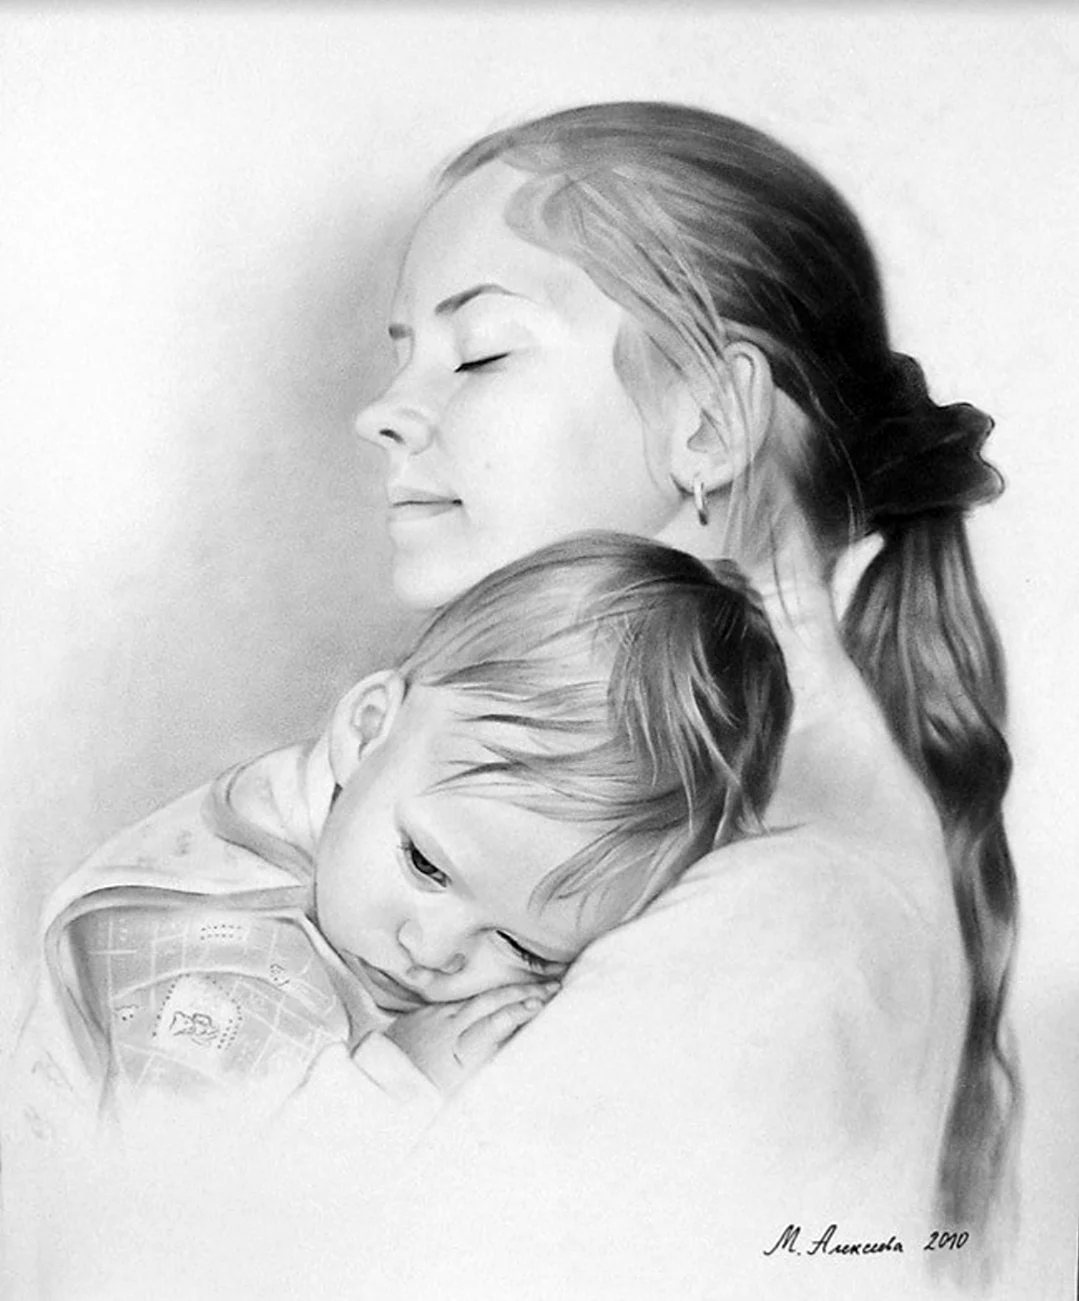 Портрет матери и ребенка. Для срисовки